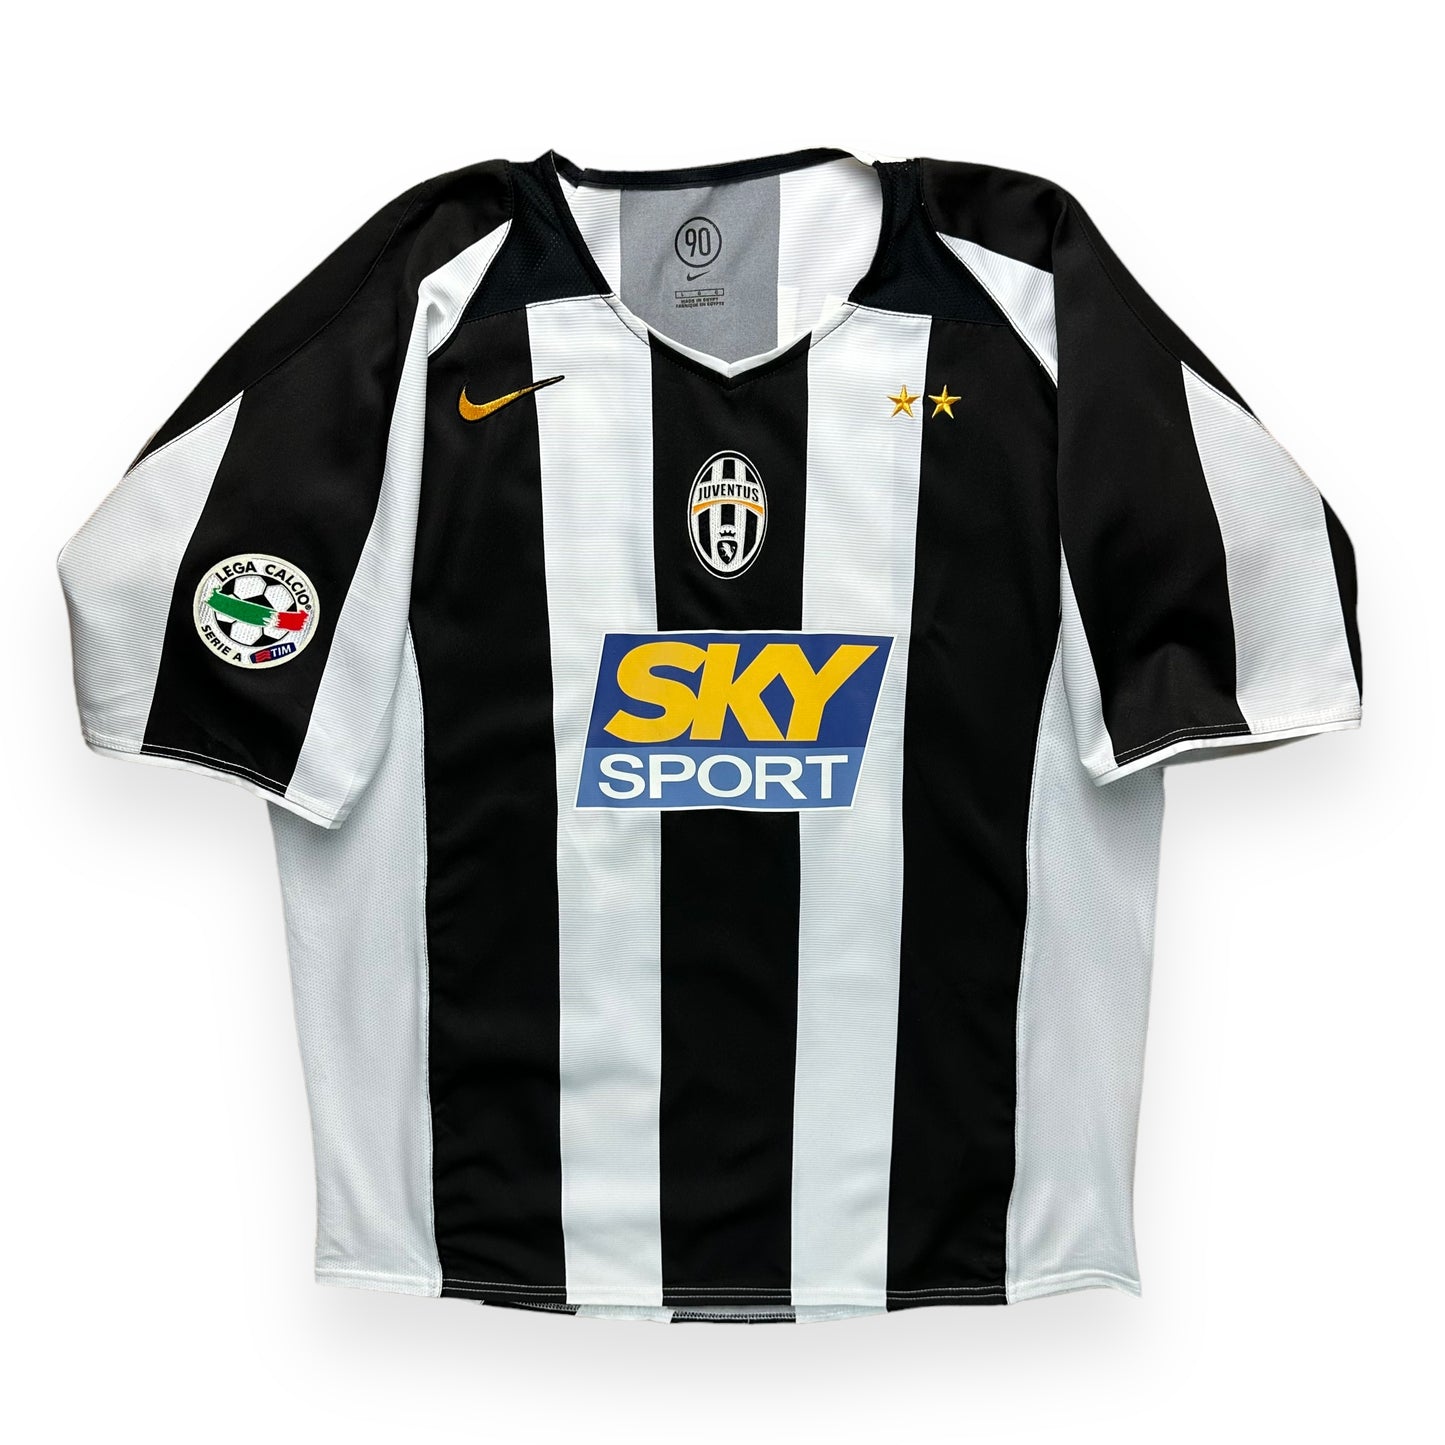 Juventus 2004-05 Home Shirt (L) Cannavaro #28